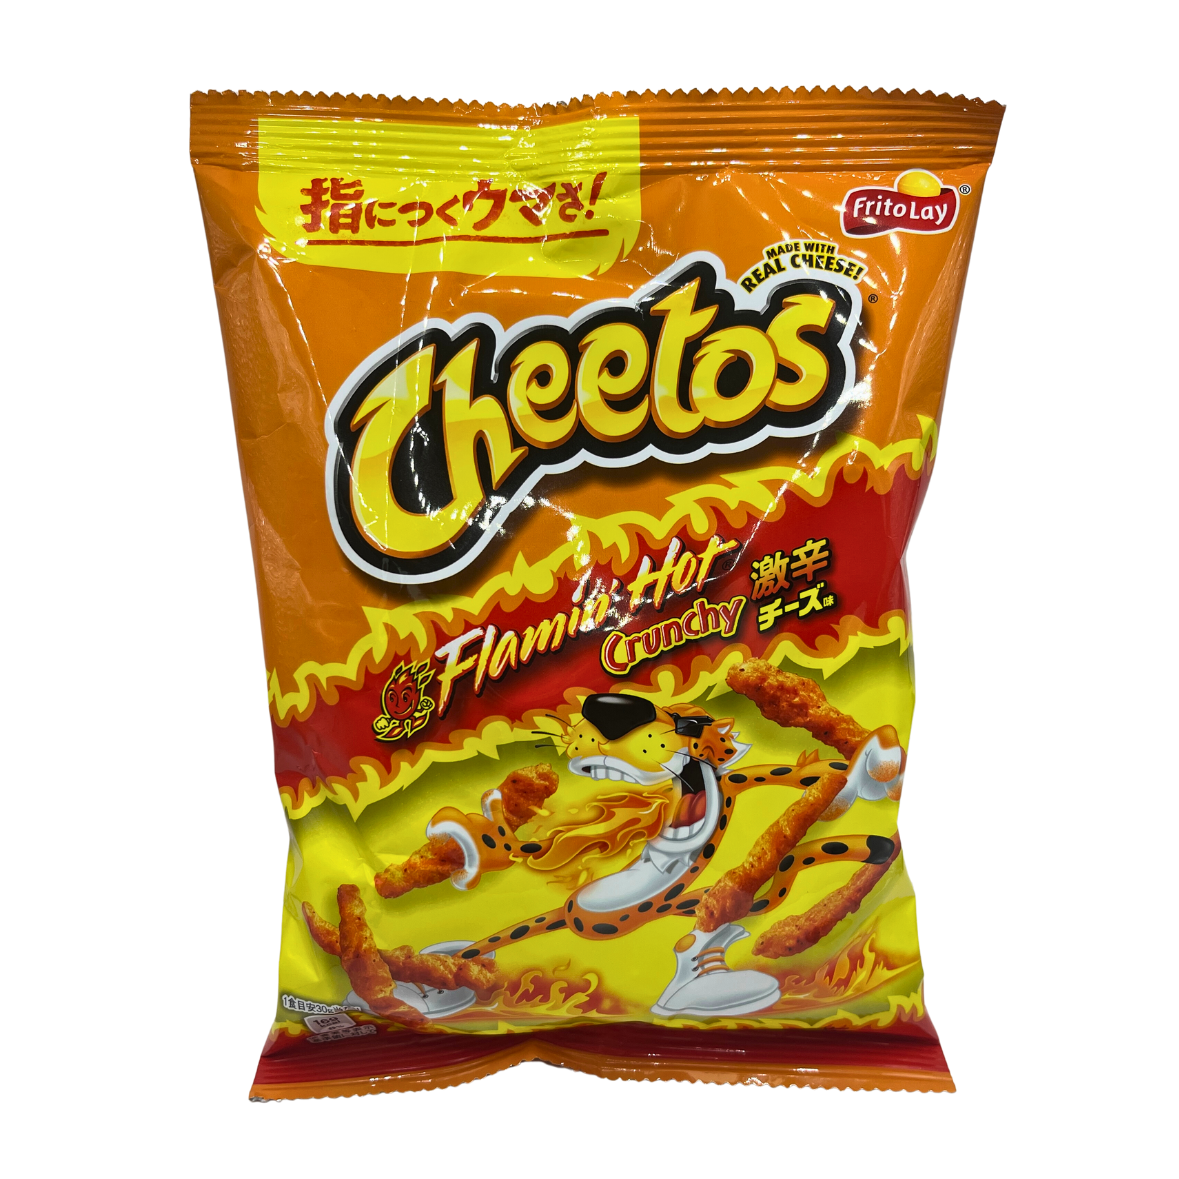 Salgadinhos Cheetos Crunchy Cheddar Cheese Flavored Snacks